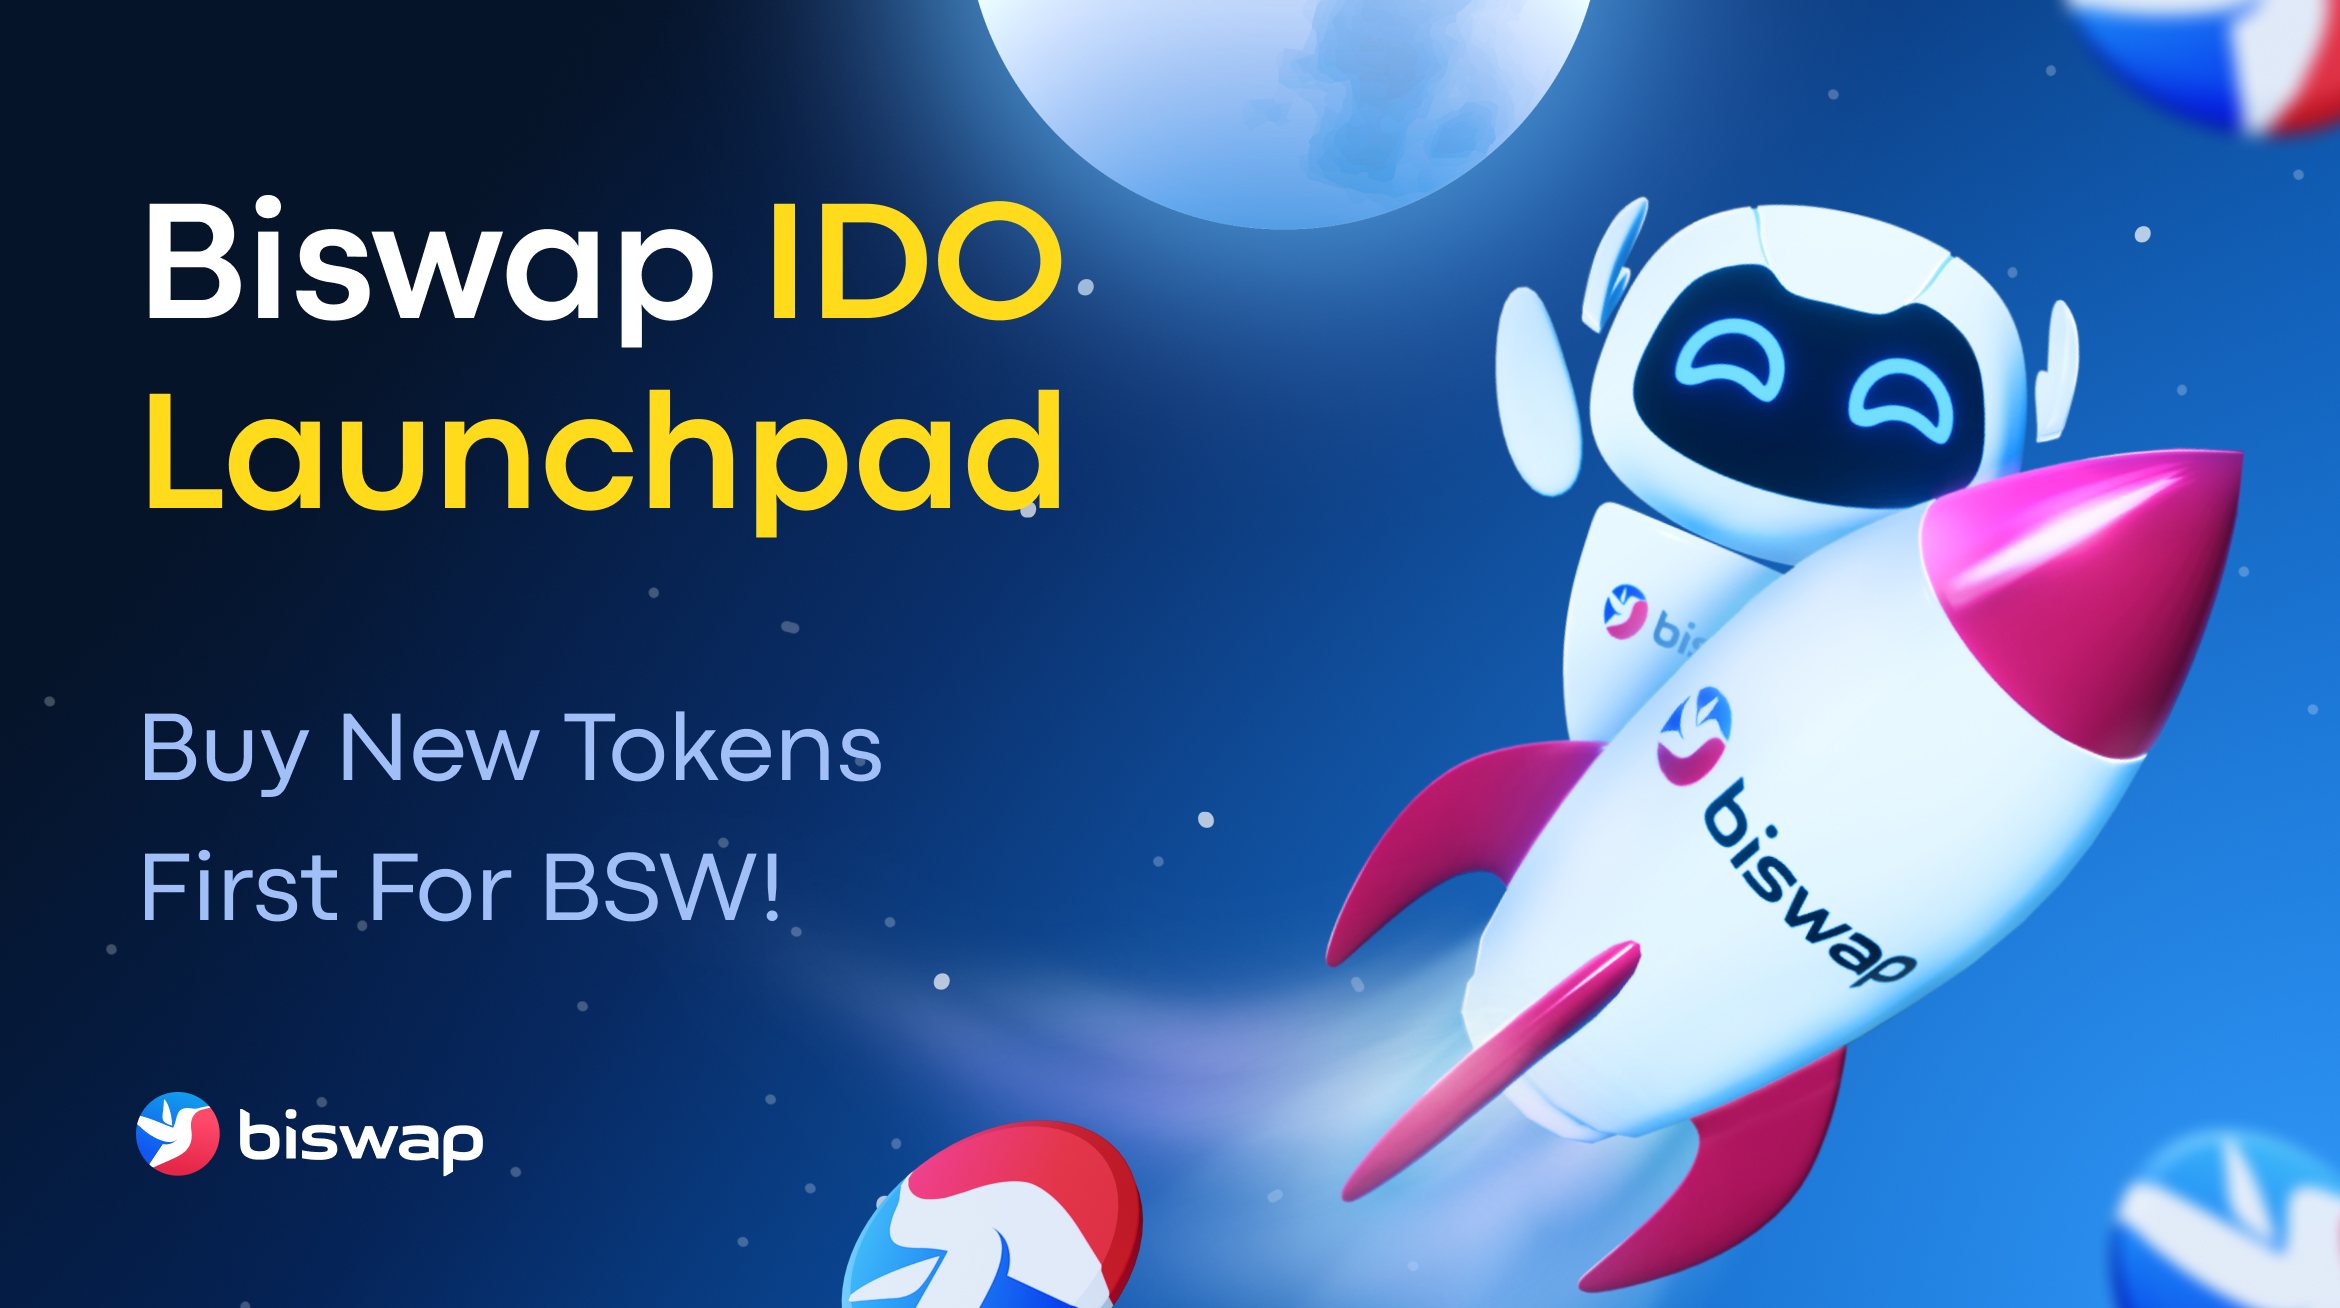 Biswap IDO Launchpad